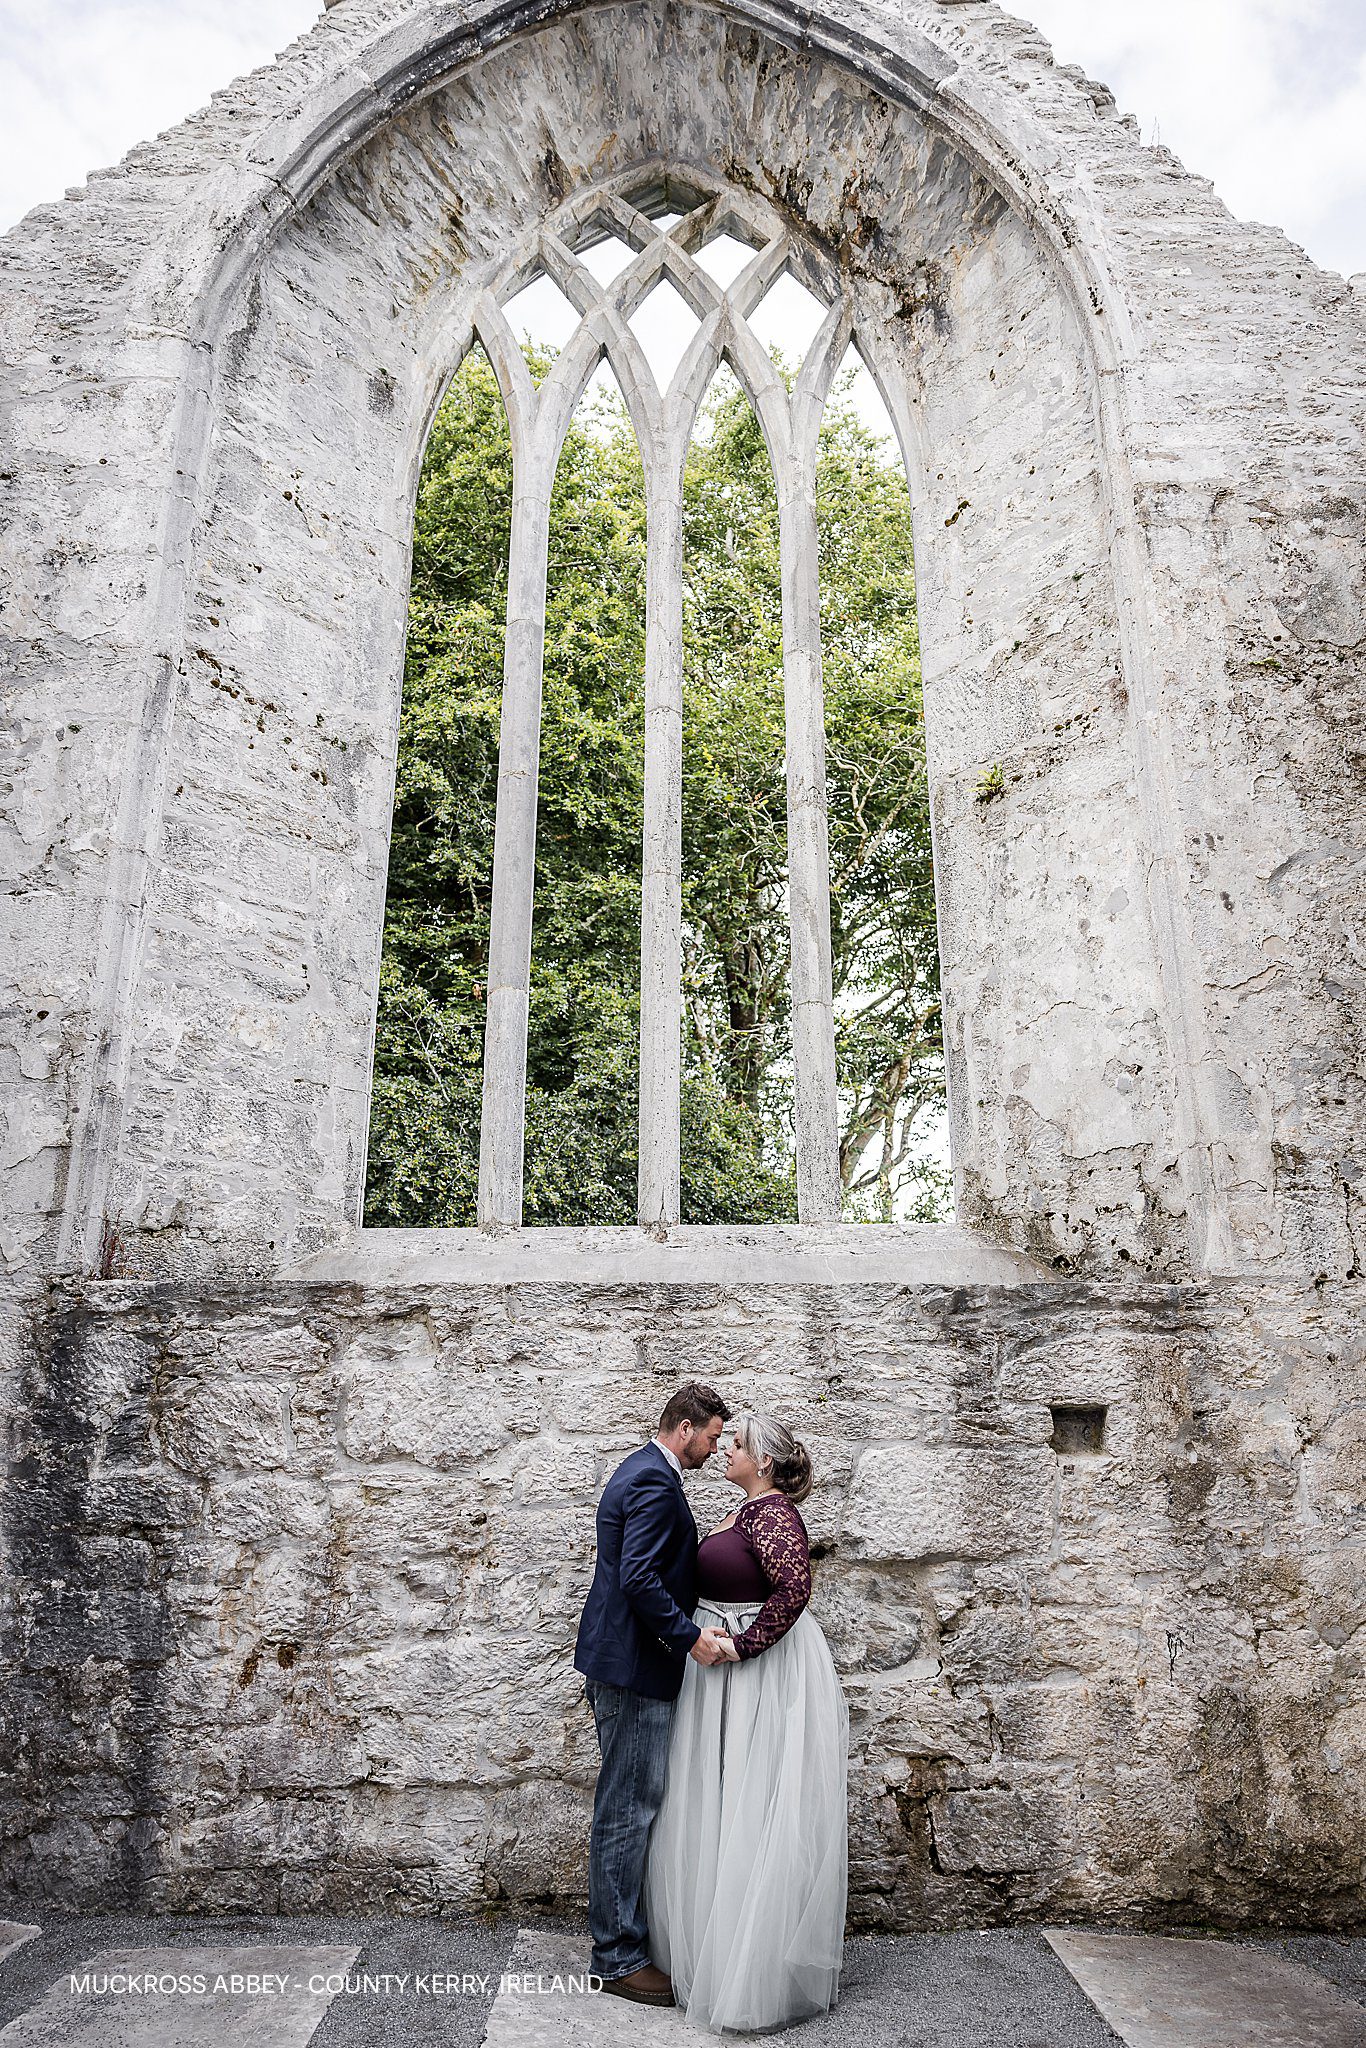 Destination Vow Renewal photographer - muckross abbey ireland